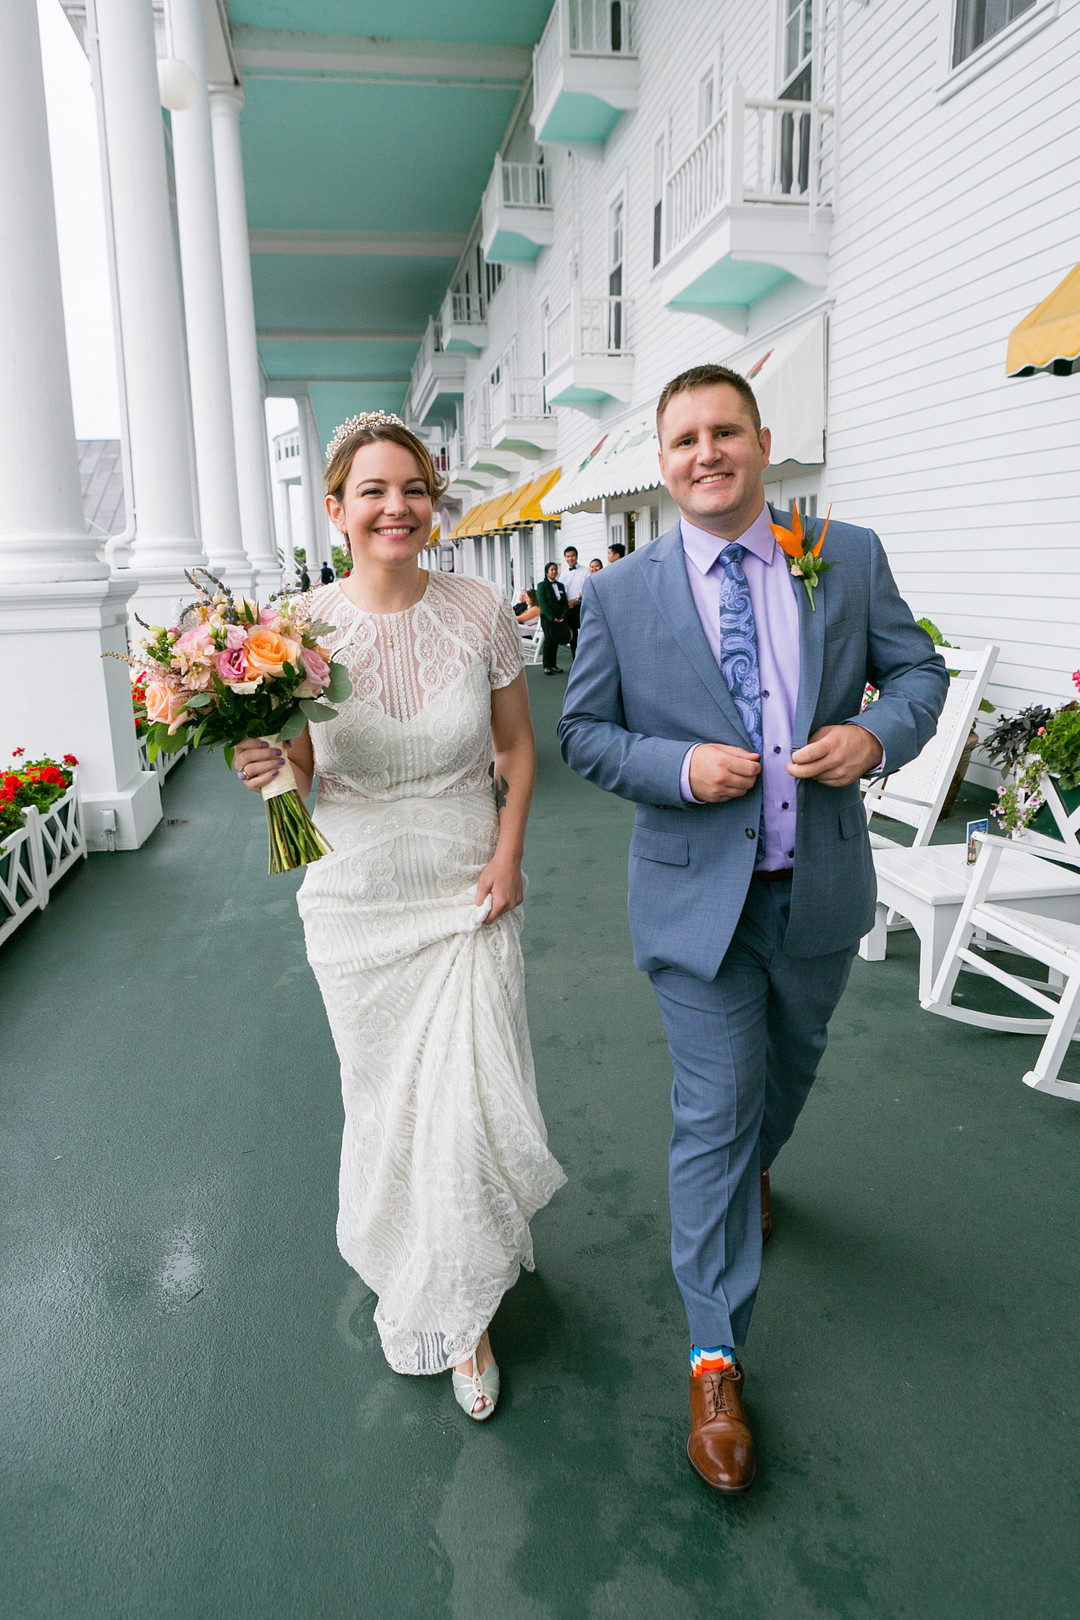 Veranda Walk | Vintage Mackinac Island Wedding